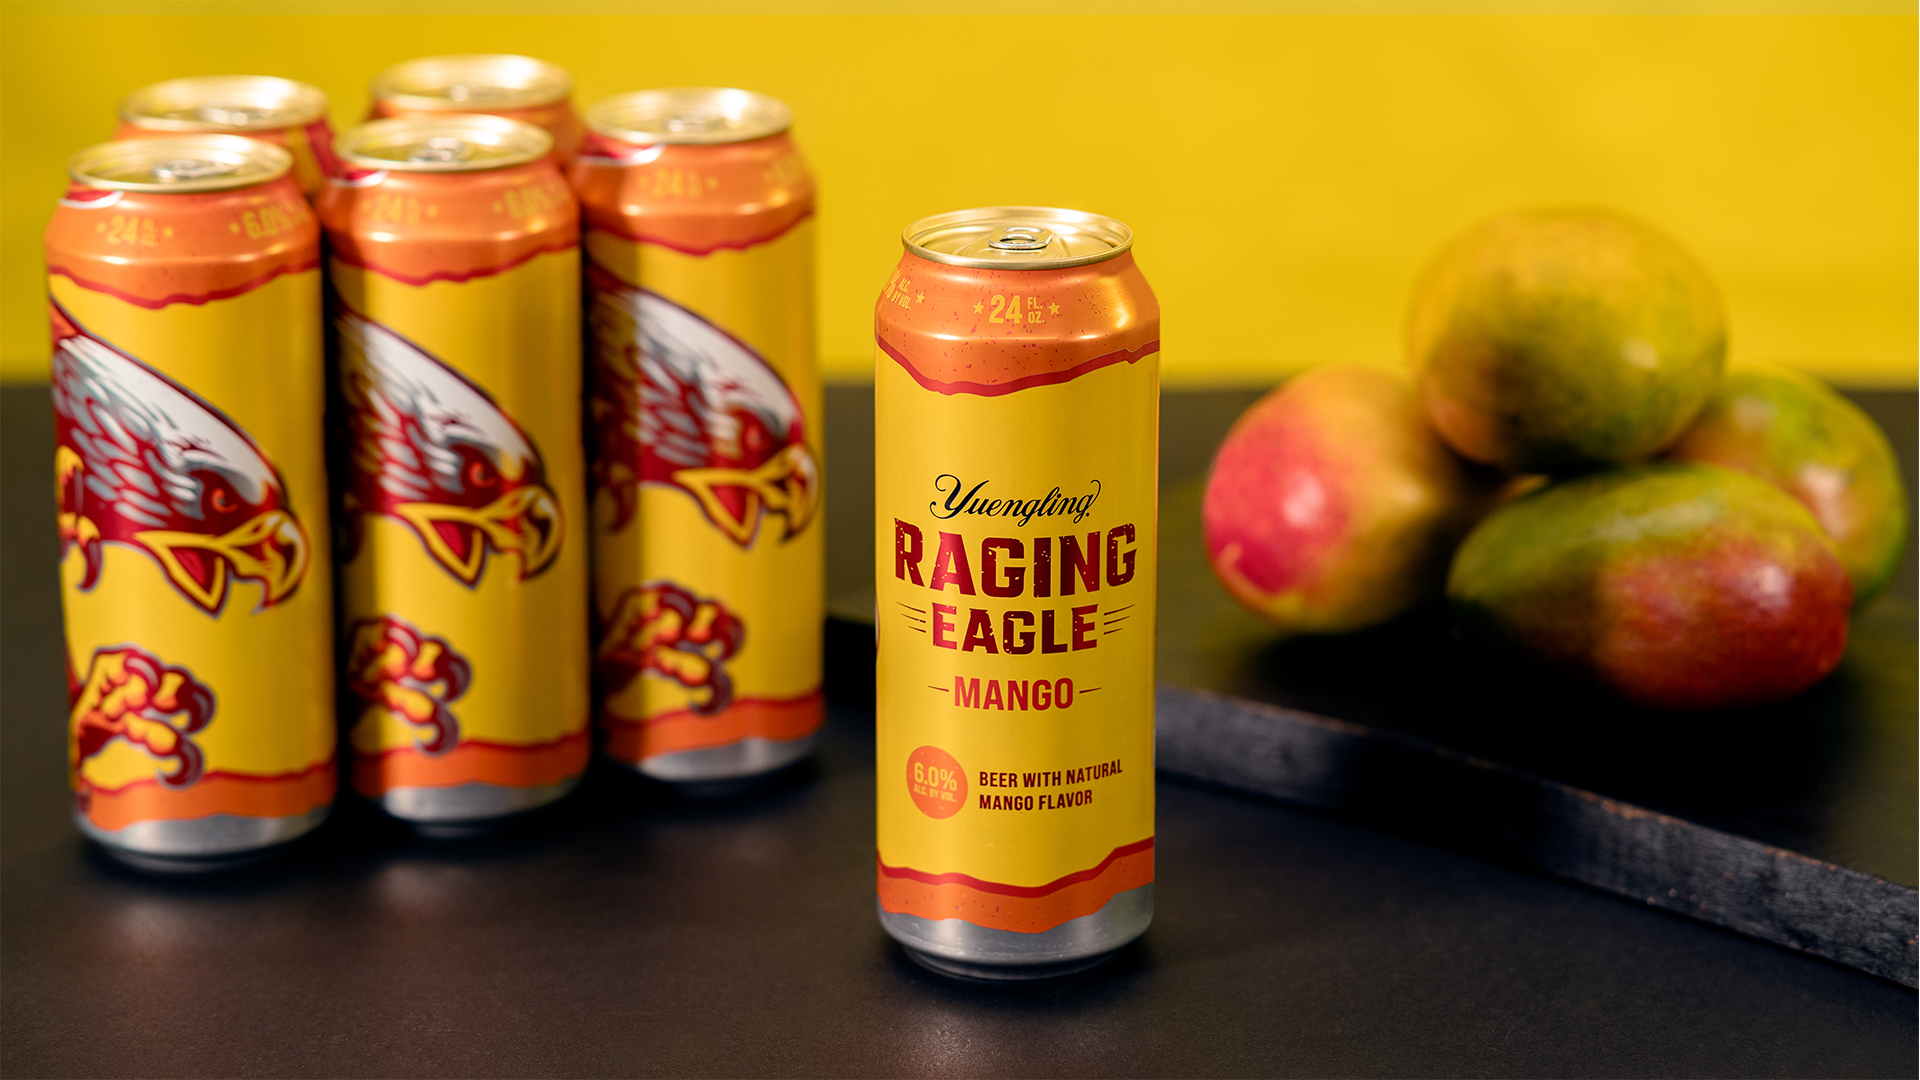 Yuengling Raging Eagle Mango Beer